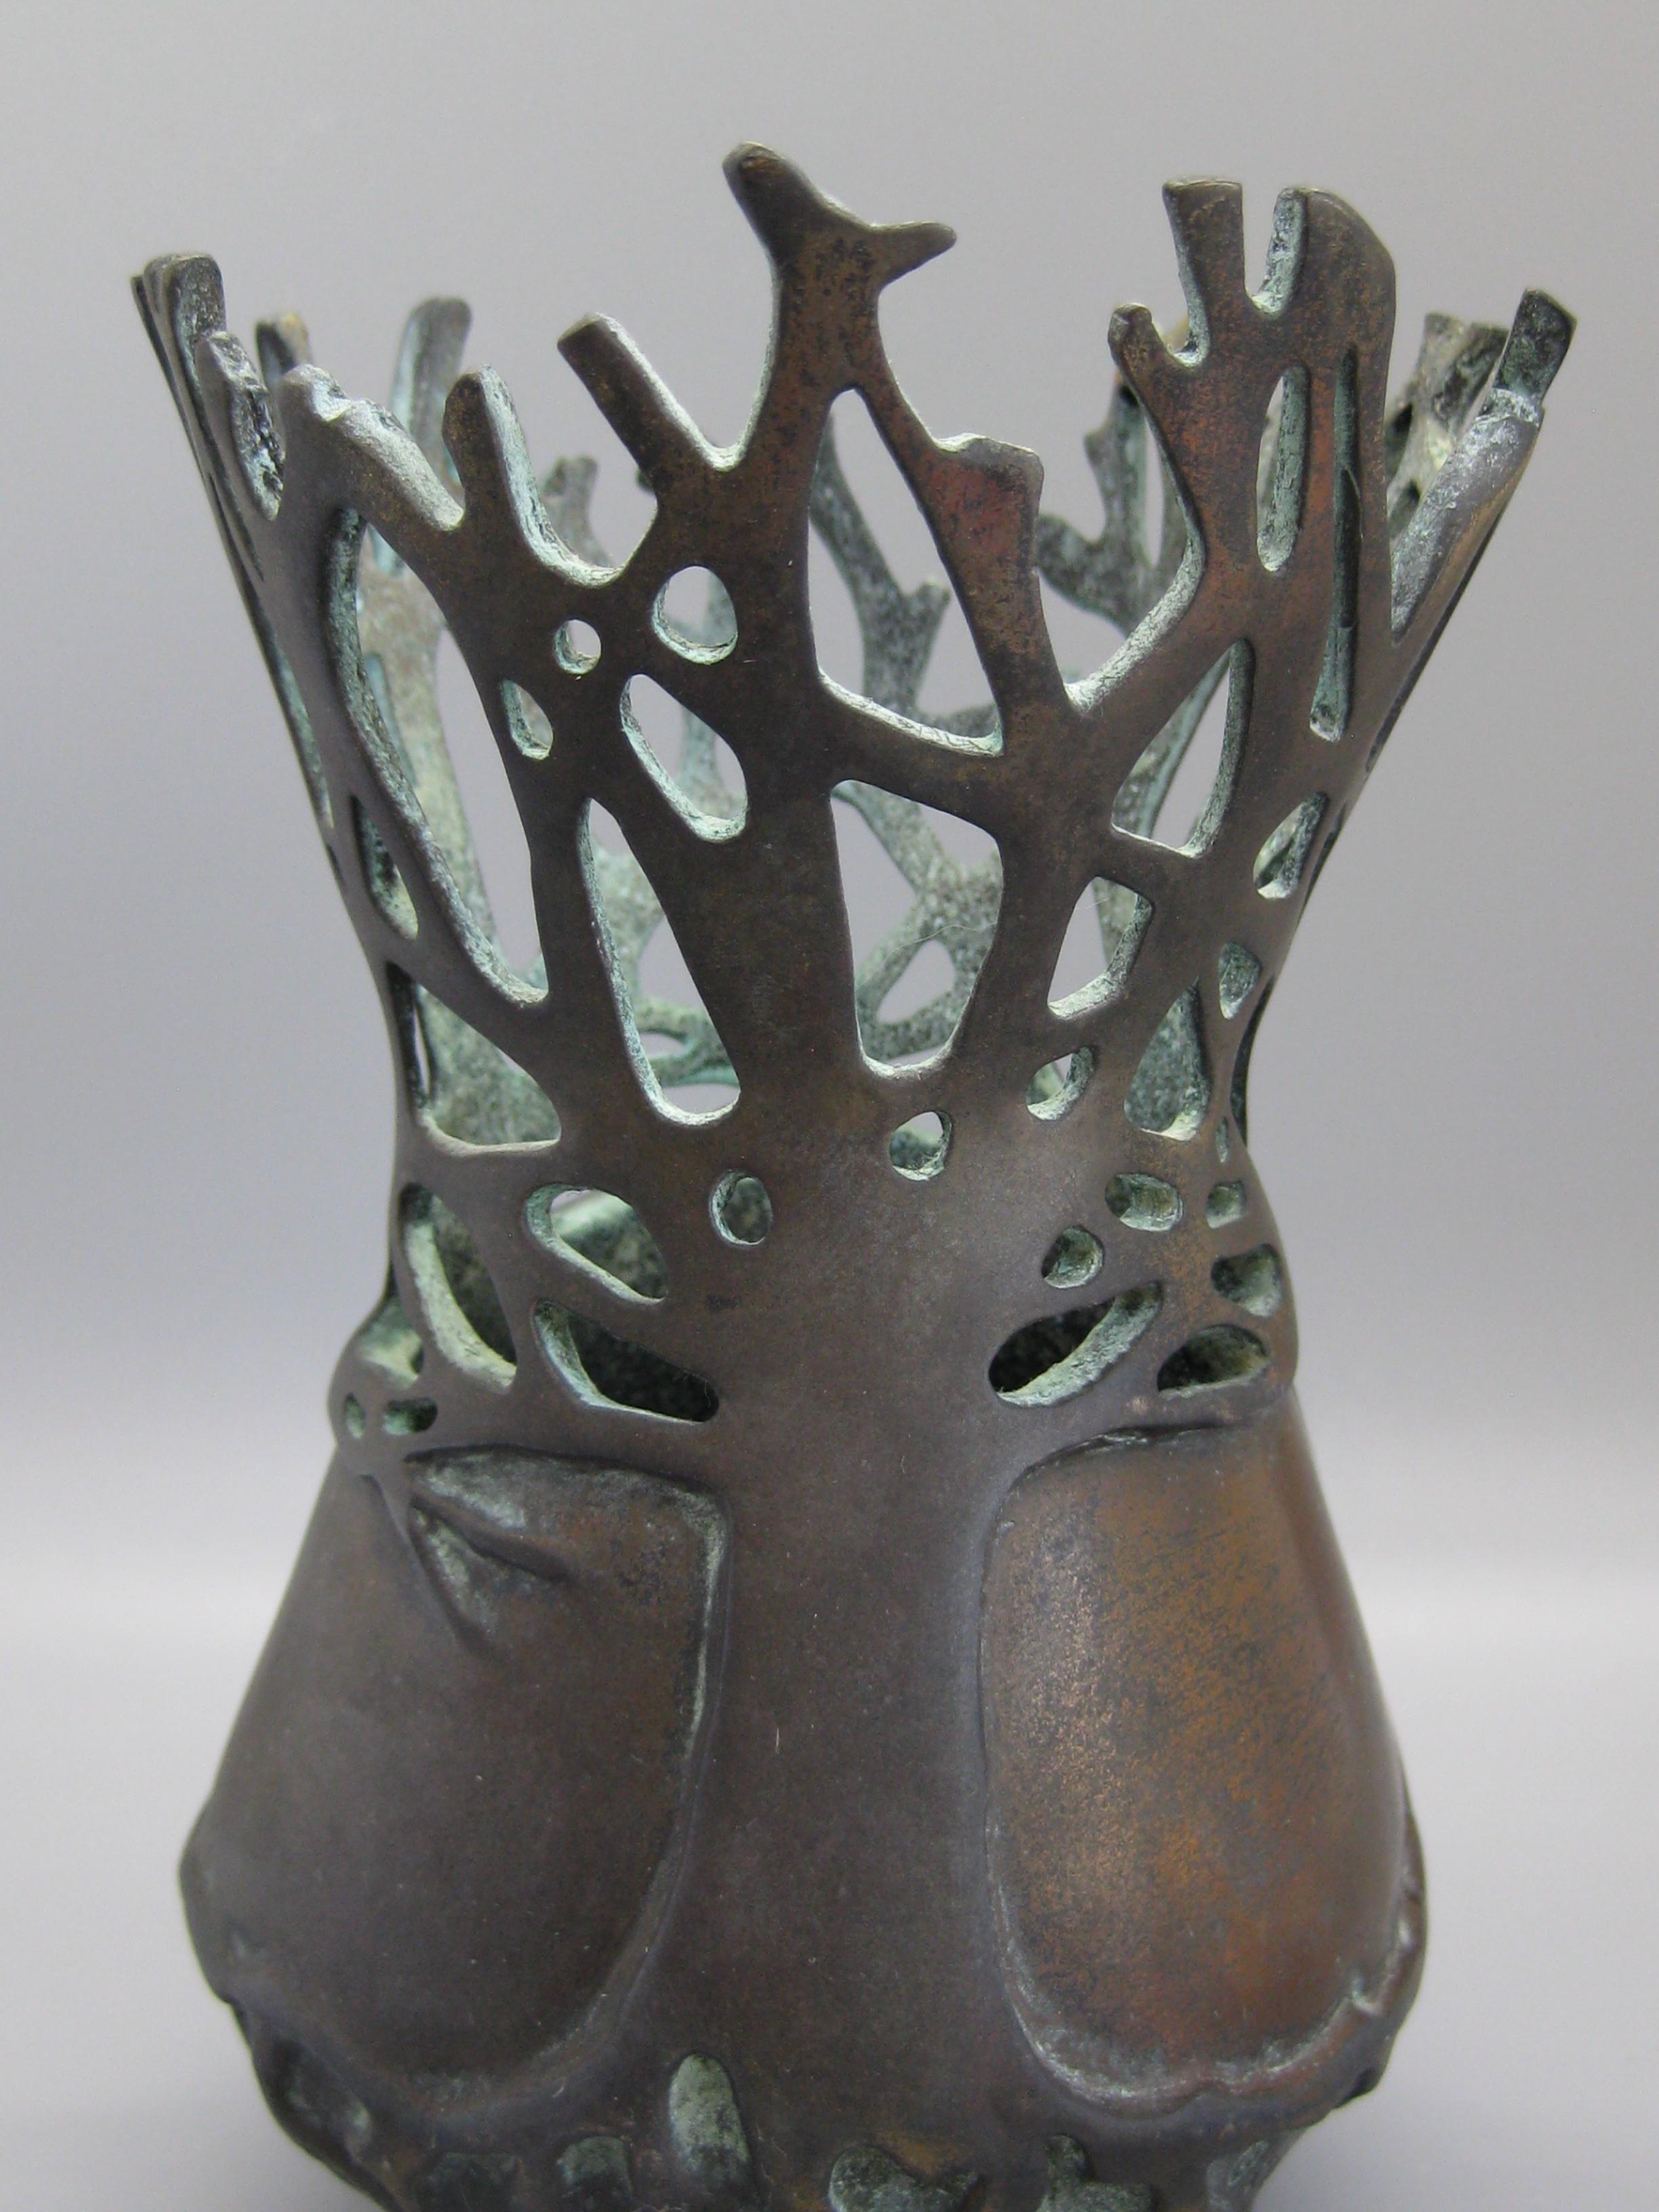 2001 Carol Alleman Organic Midcentury Bronze Vase Vessel Sculpture Limited 75 In Excellent Condition For Sale In San Diego, CA